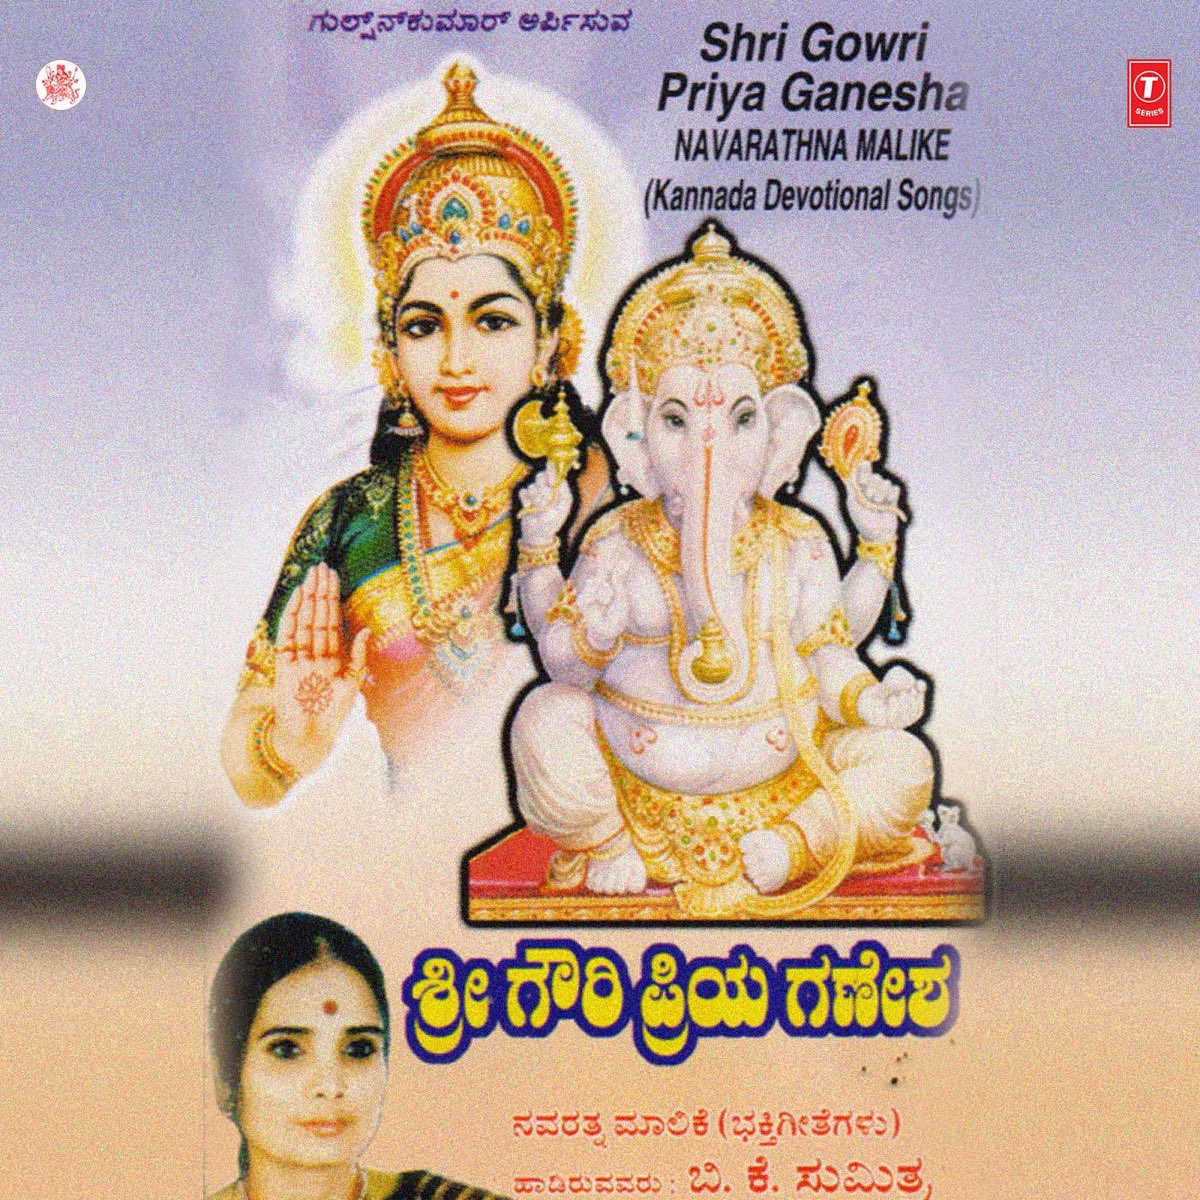 Shri Gowri Priya Ganesha by B.K. Sumitra on Apple Music